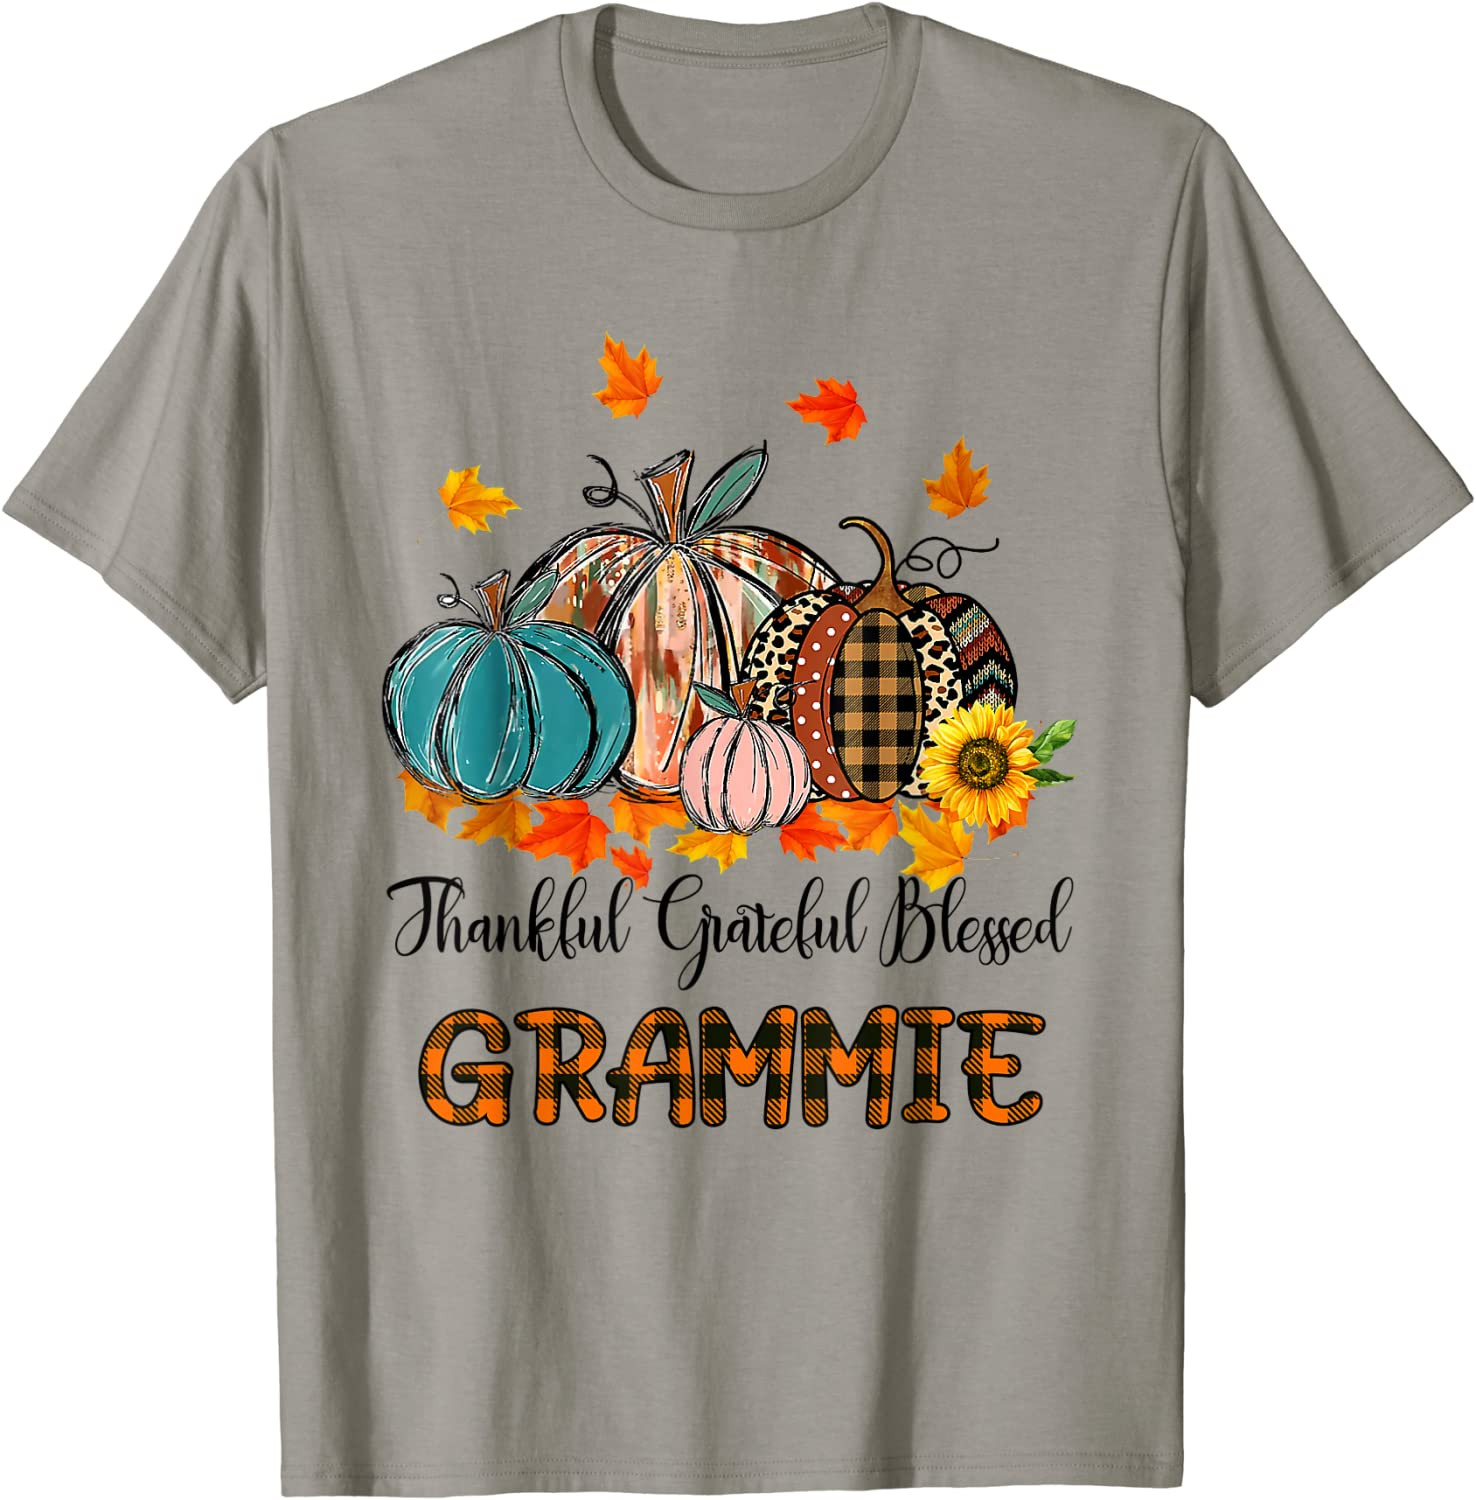 Thankful Grateful Blessed Grammie Pumpkins Thanksgiving T-Shirt